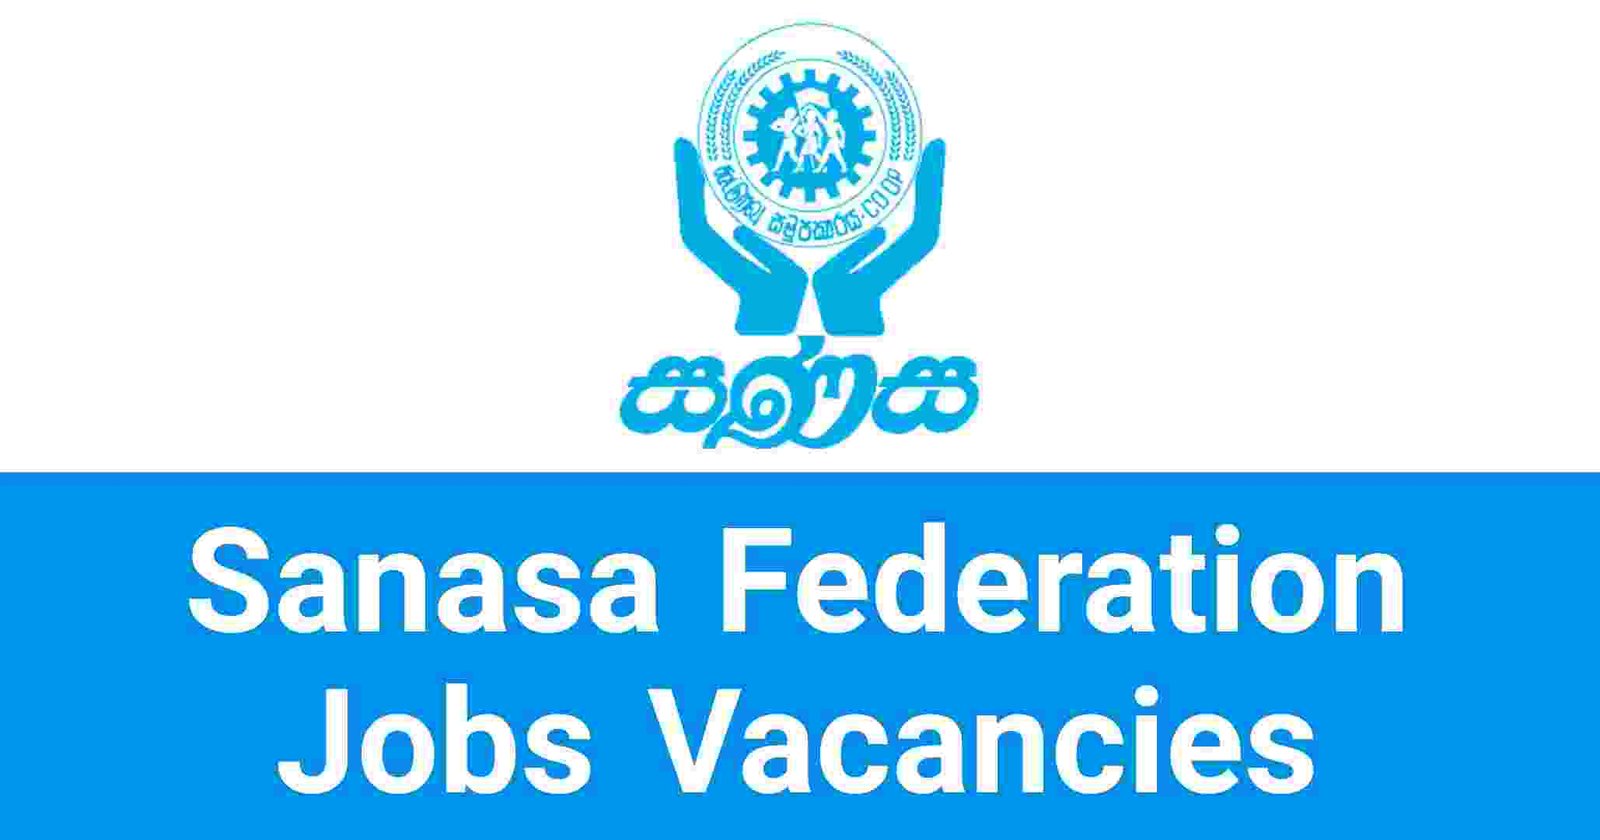 Sanasa Federation Jobs Vacancies